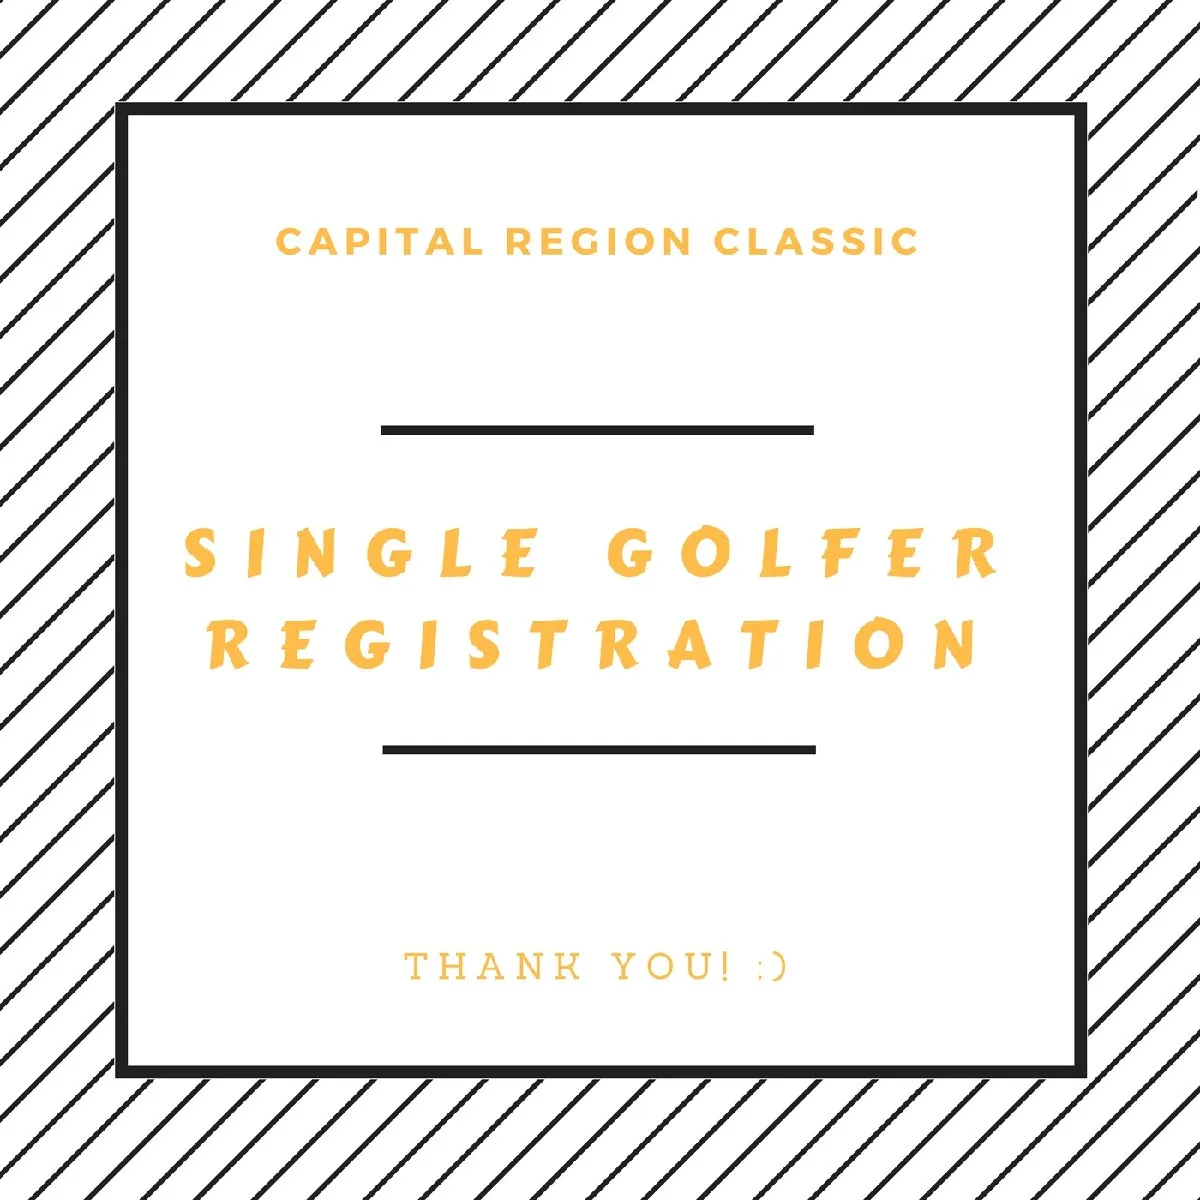 1 - Single Golfer Registration